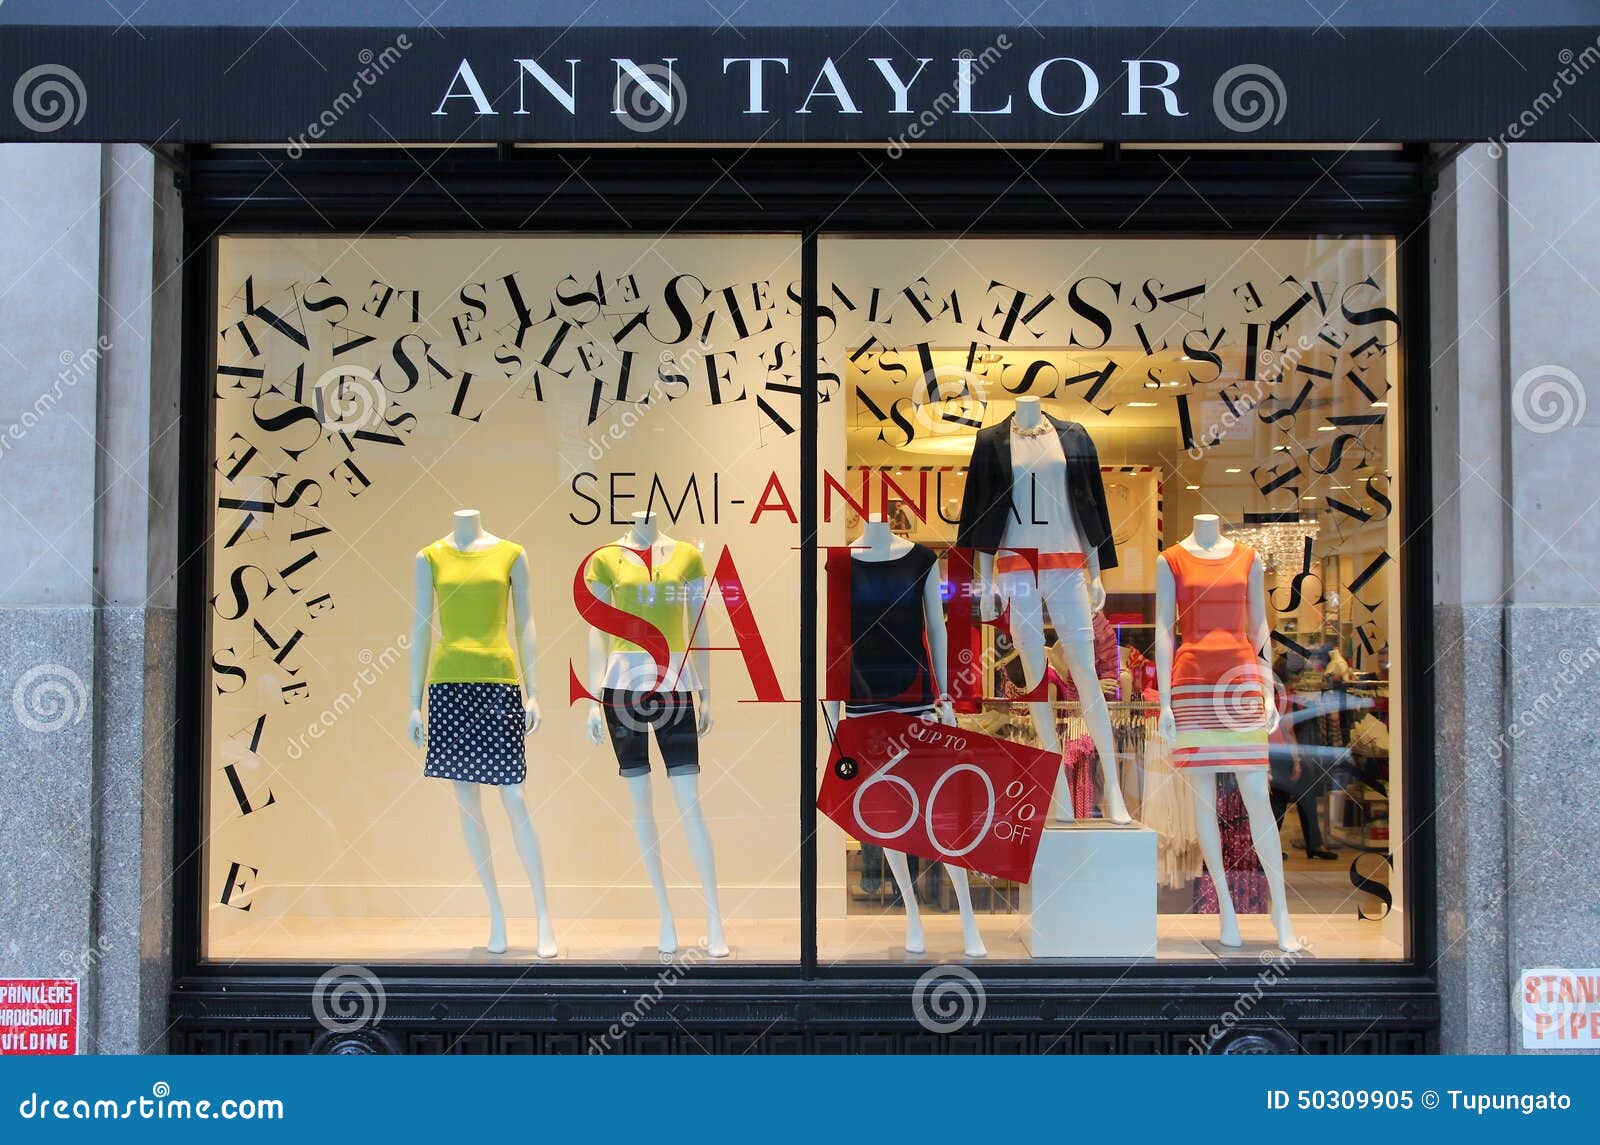 Brand New: New Logo for Ann Taylor